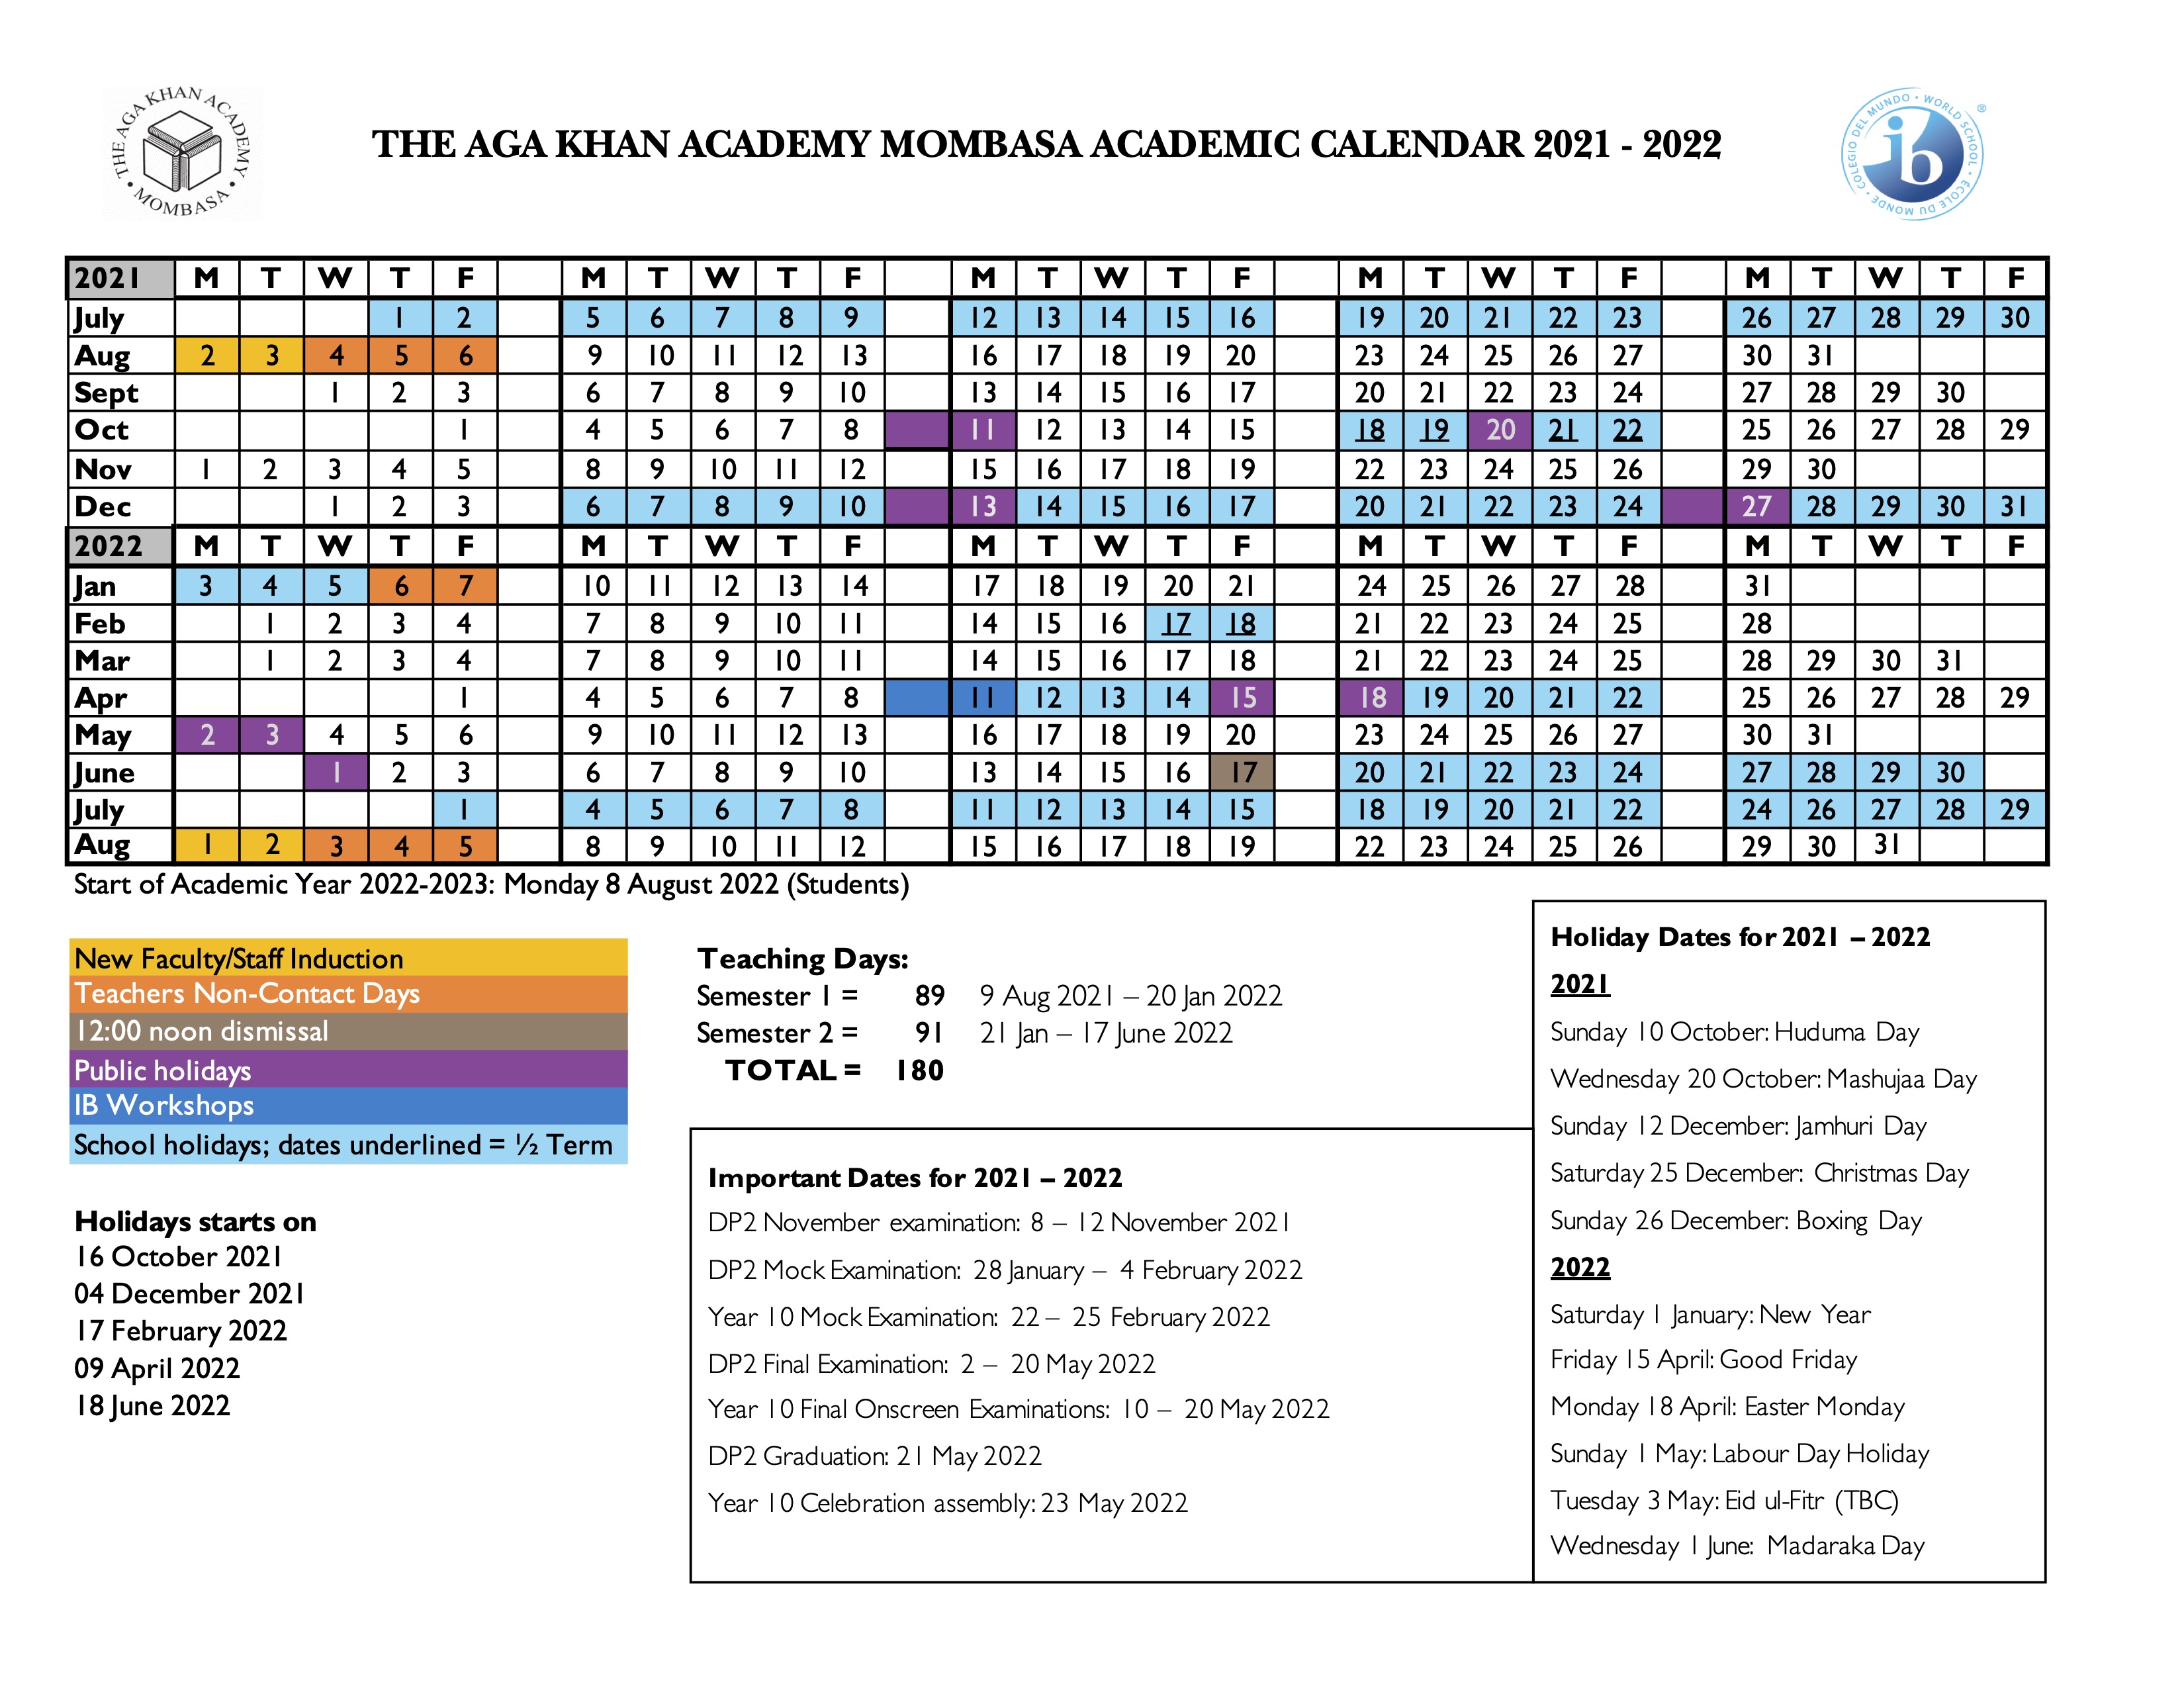 Calendar 2021-2022 updated